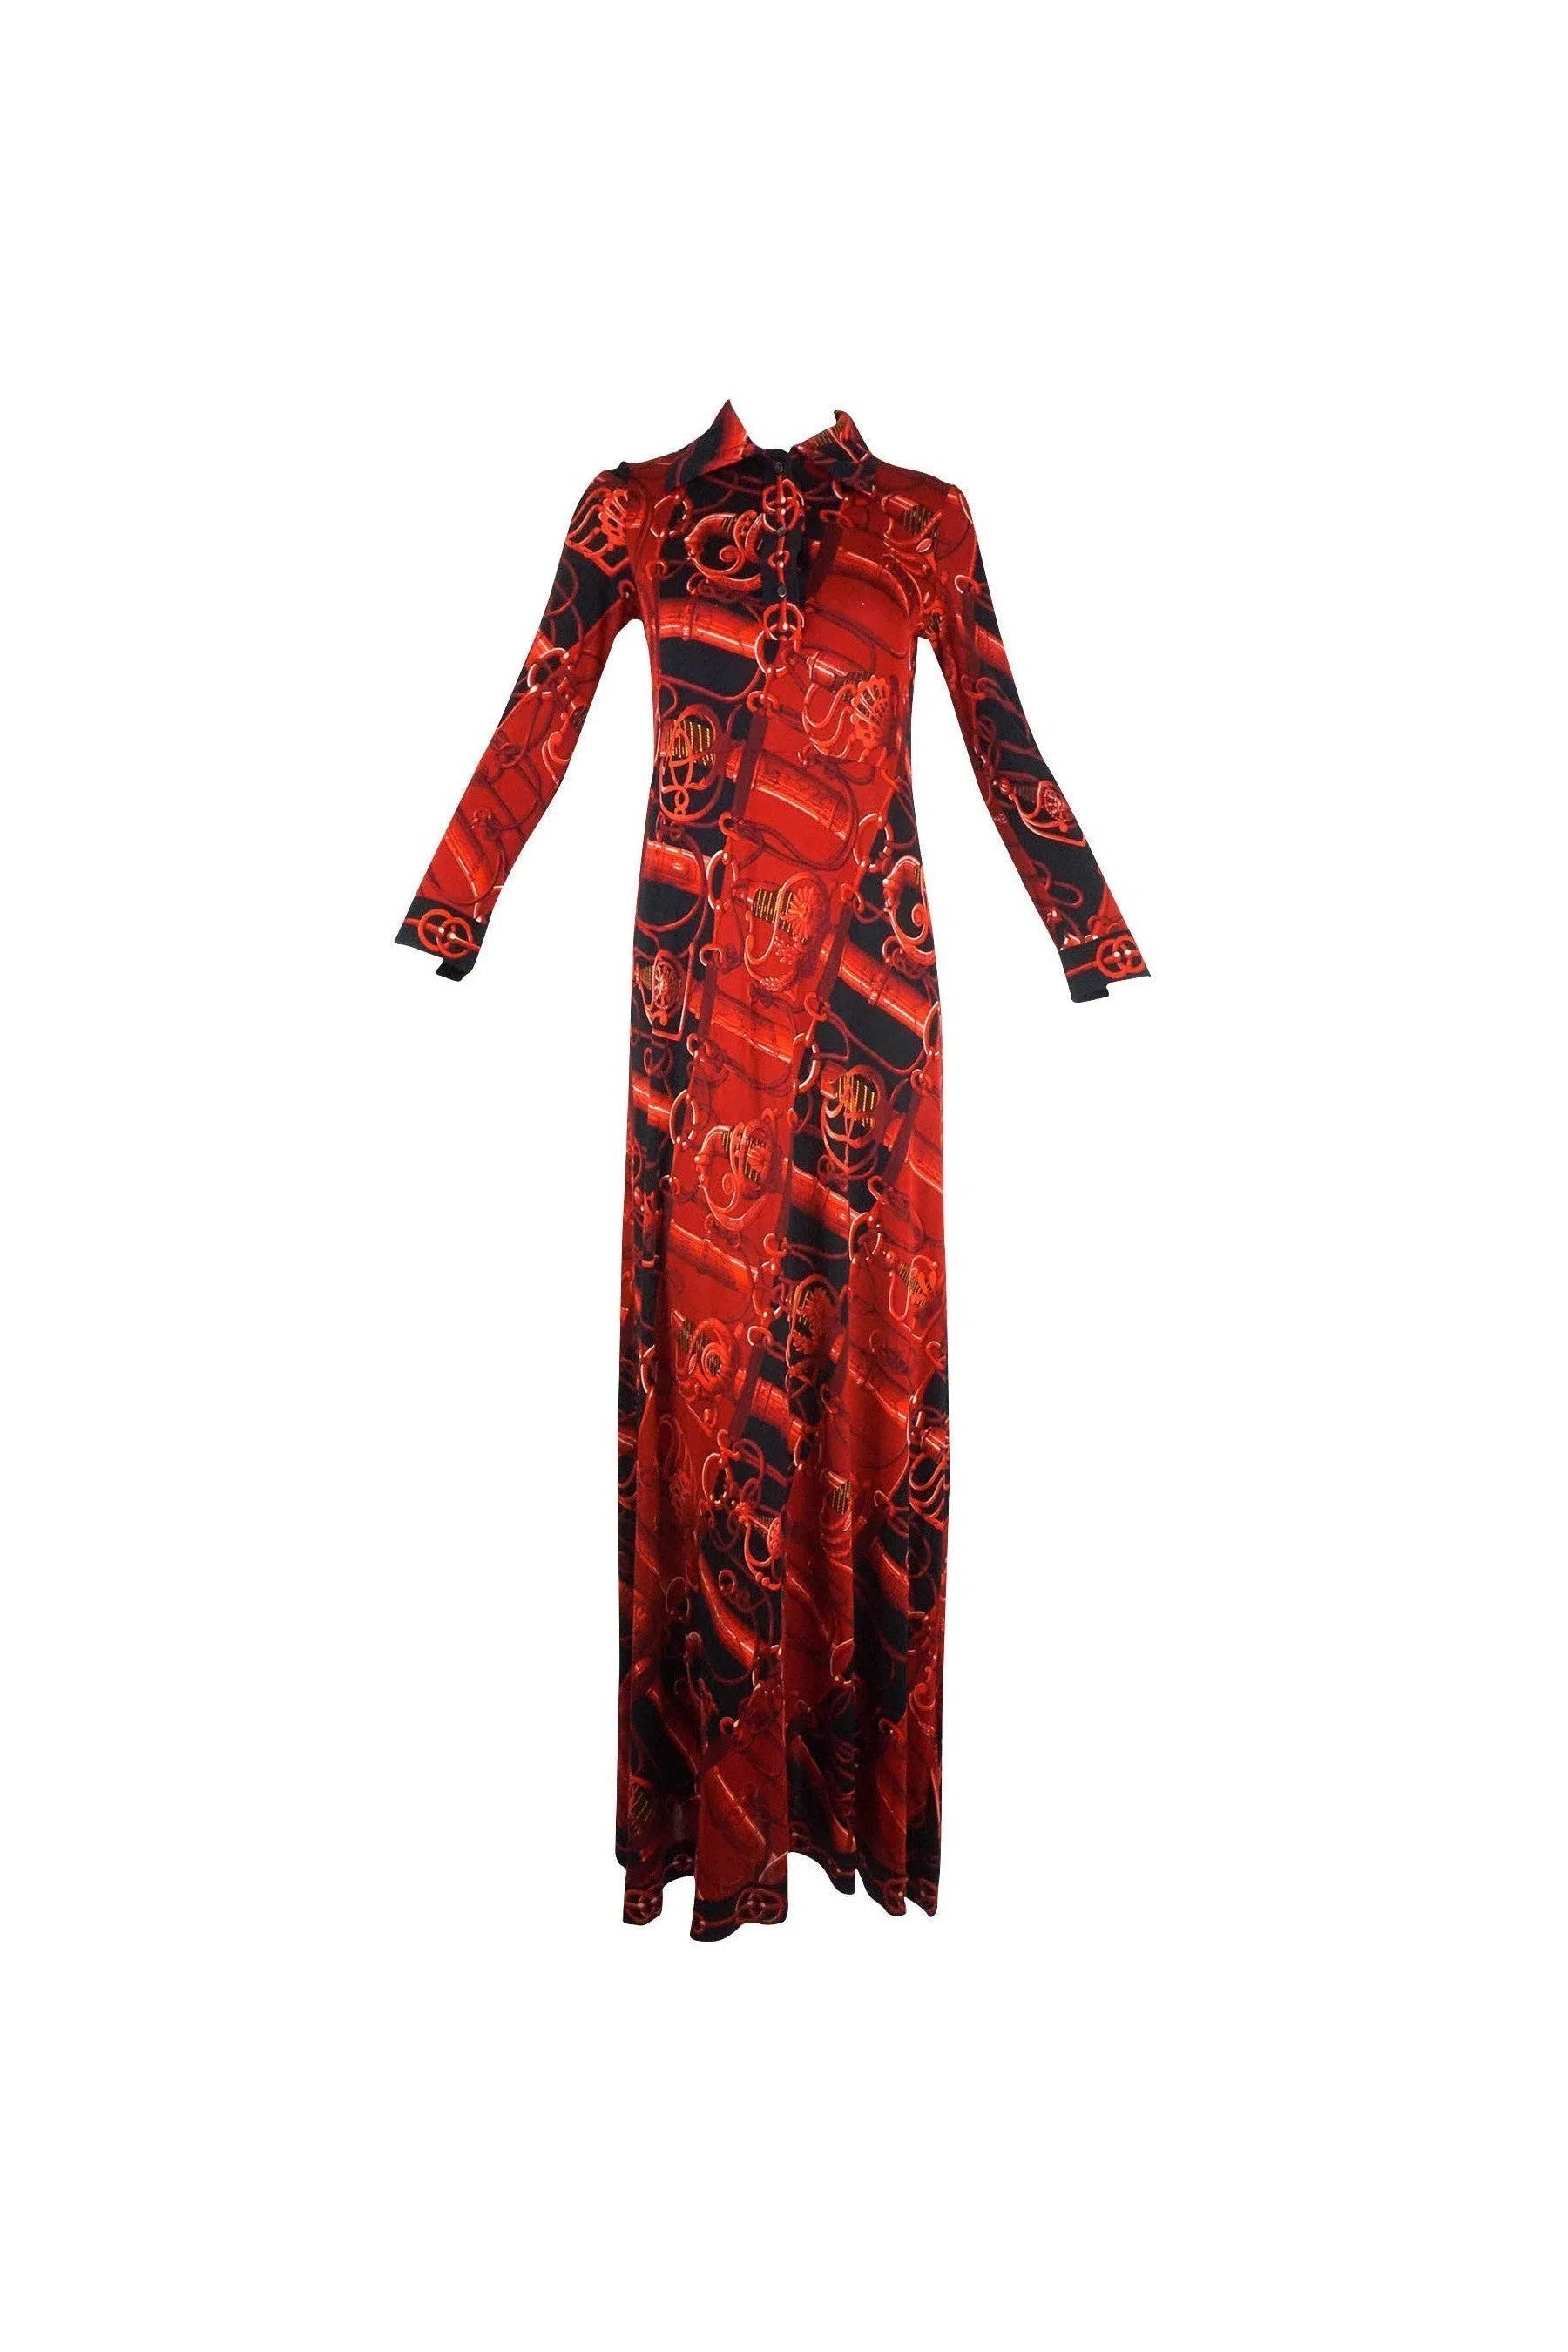 Hermès Vintage Cliquetis Print Silk Jersey Shirt Dress 1990's - Foxy Couture Carmel